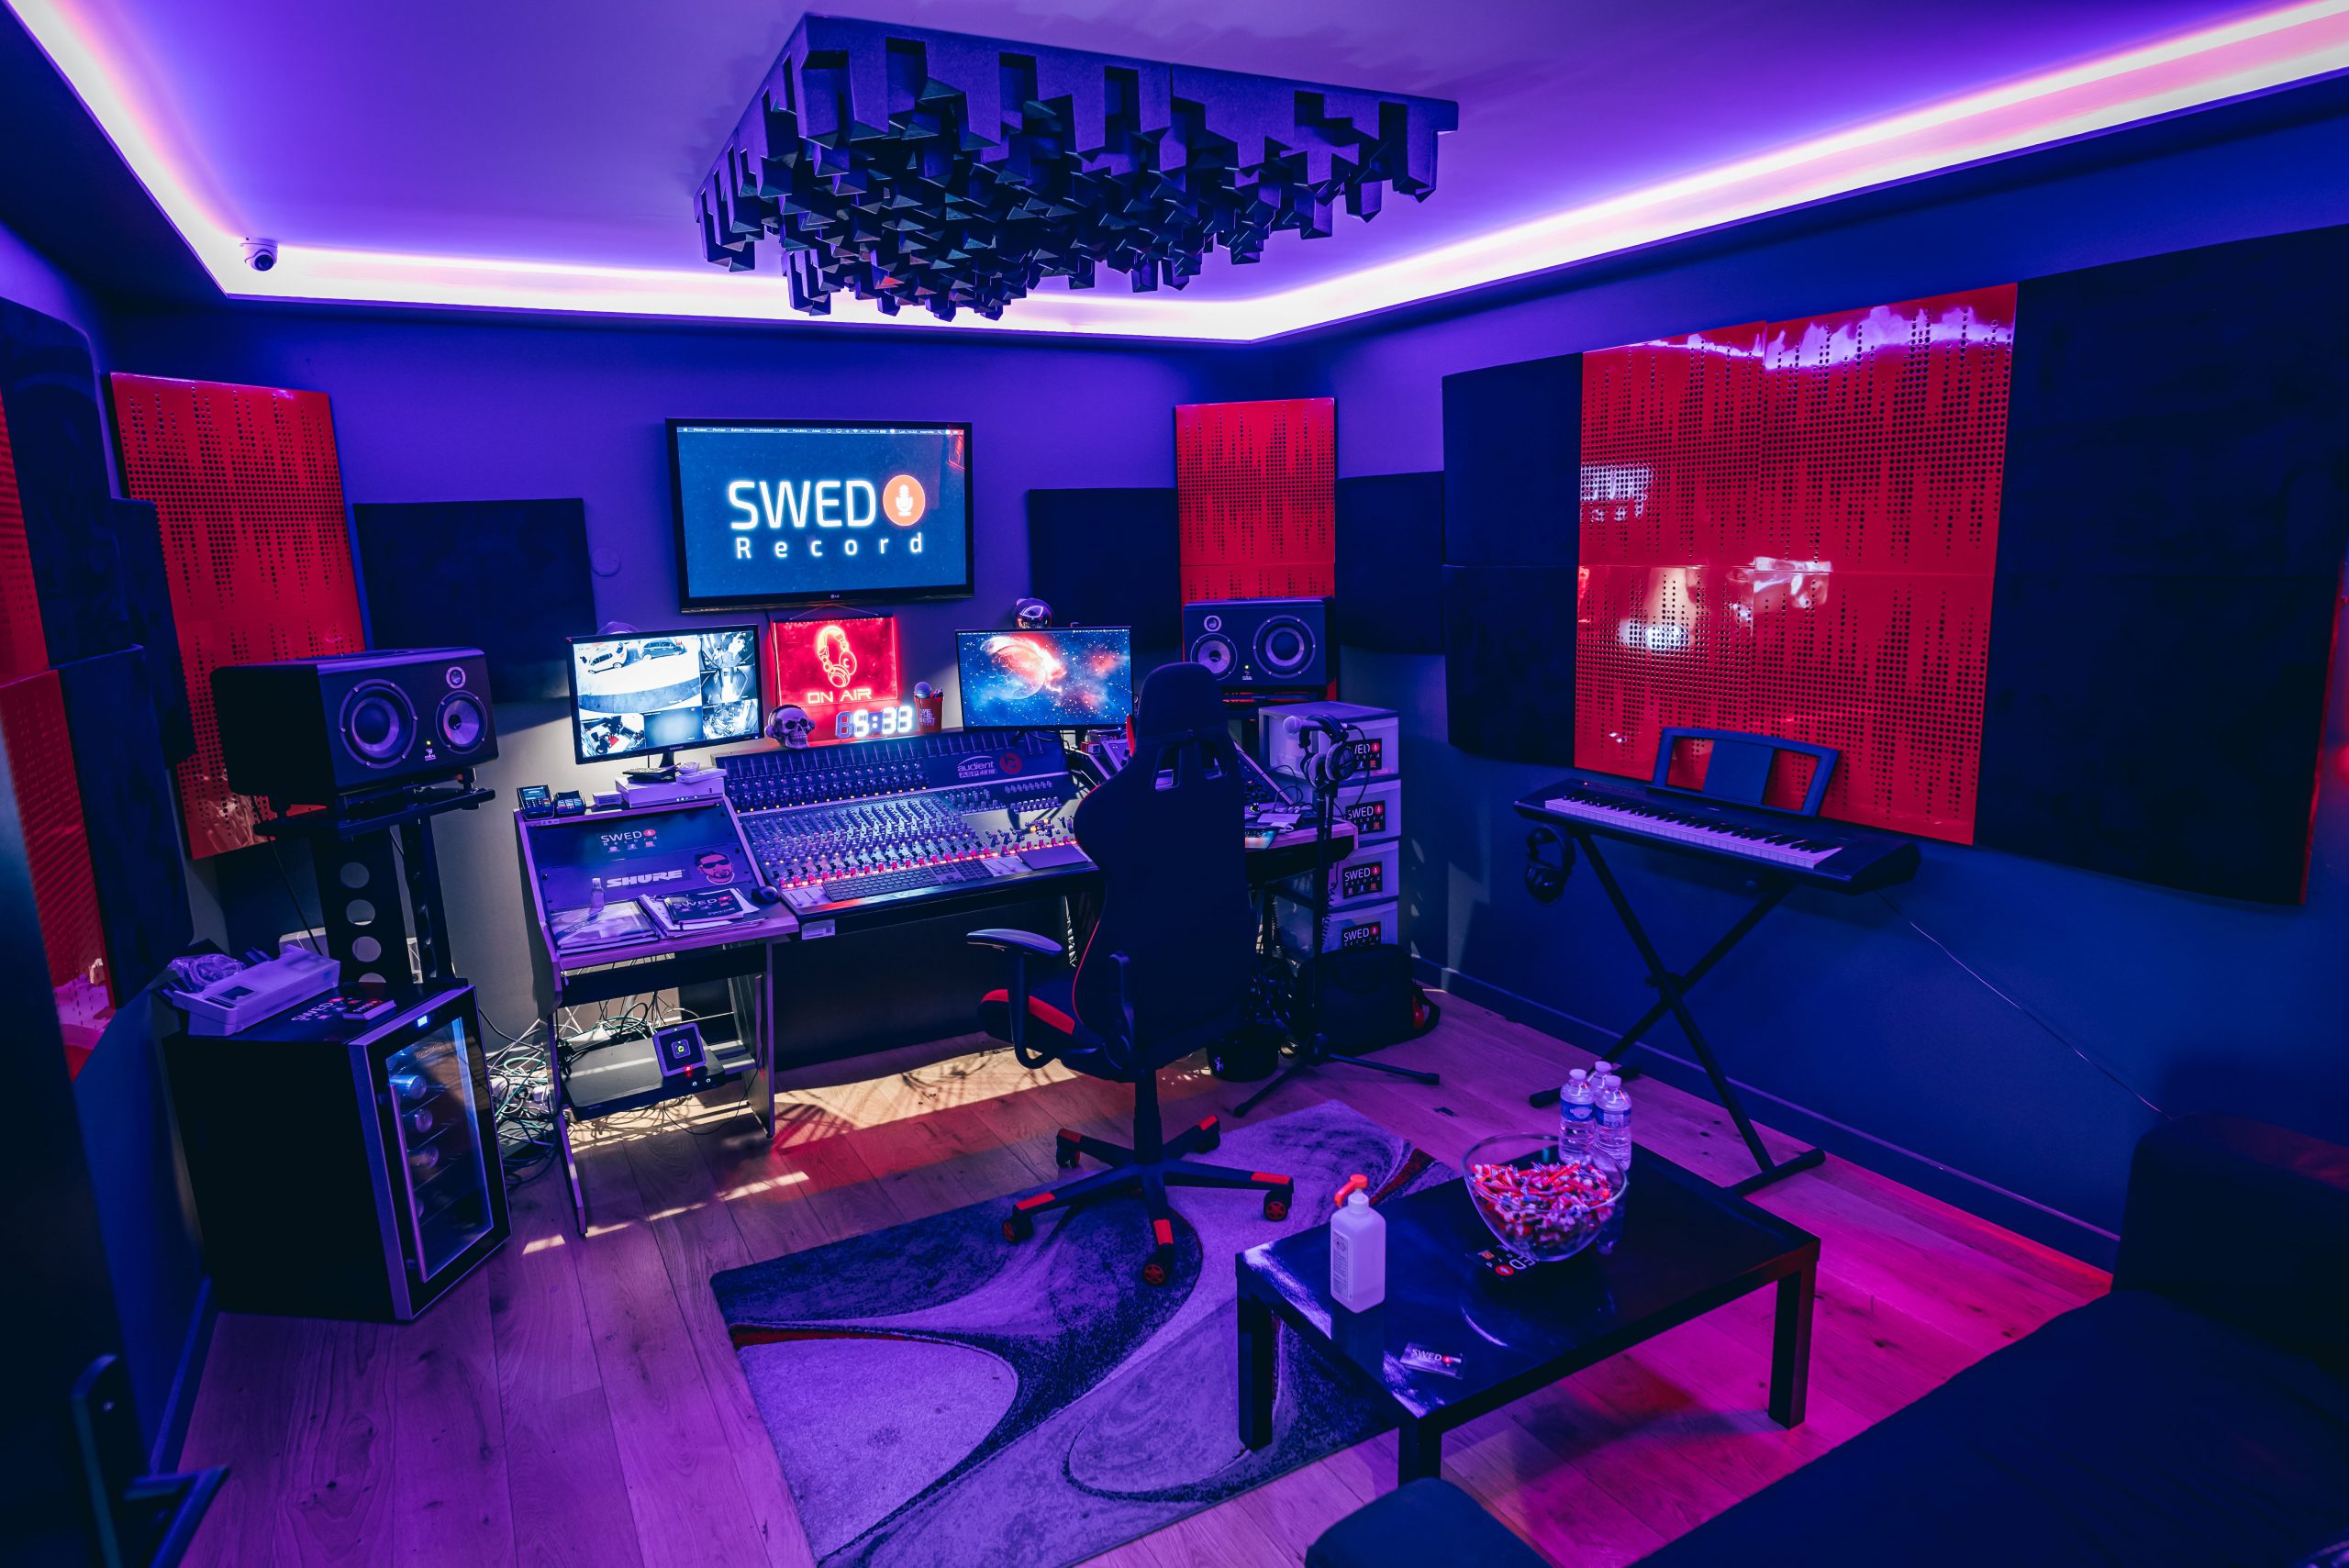 About Swed Record - Studio musique à Toulouse